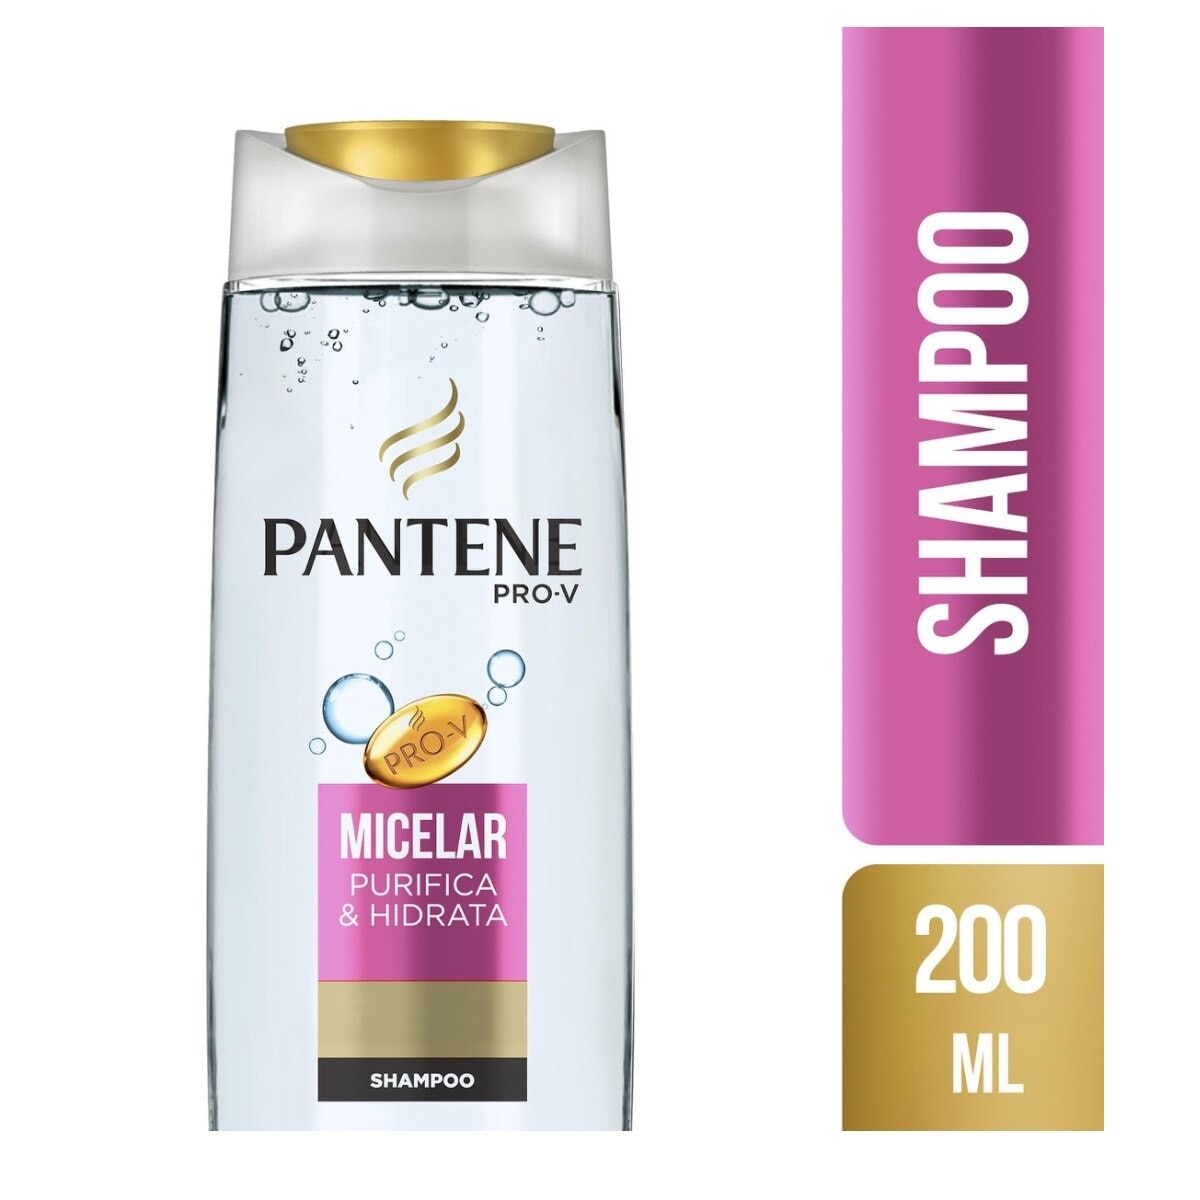 Shampoo Pantene Micellar 200ml